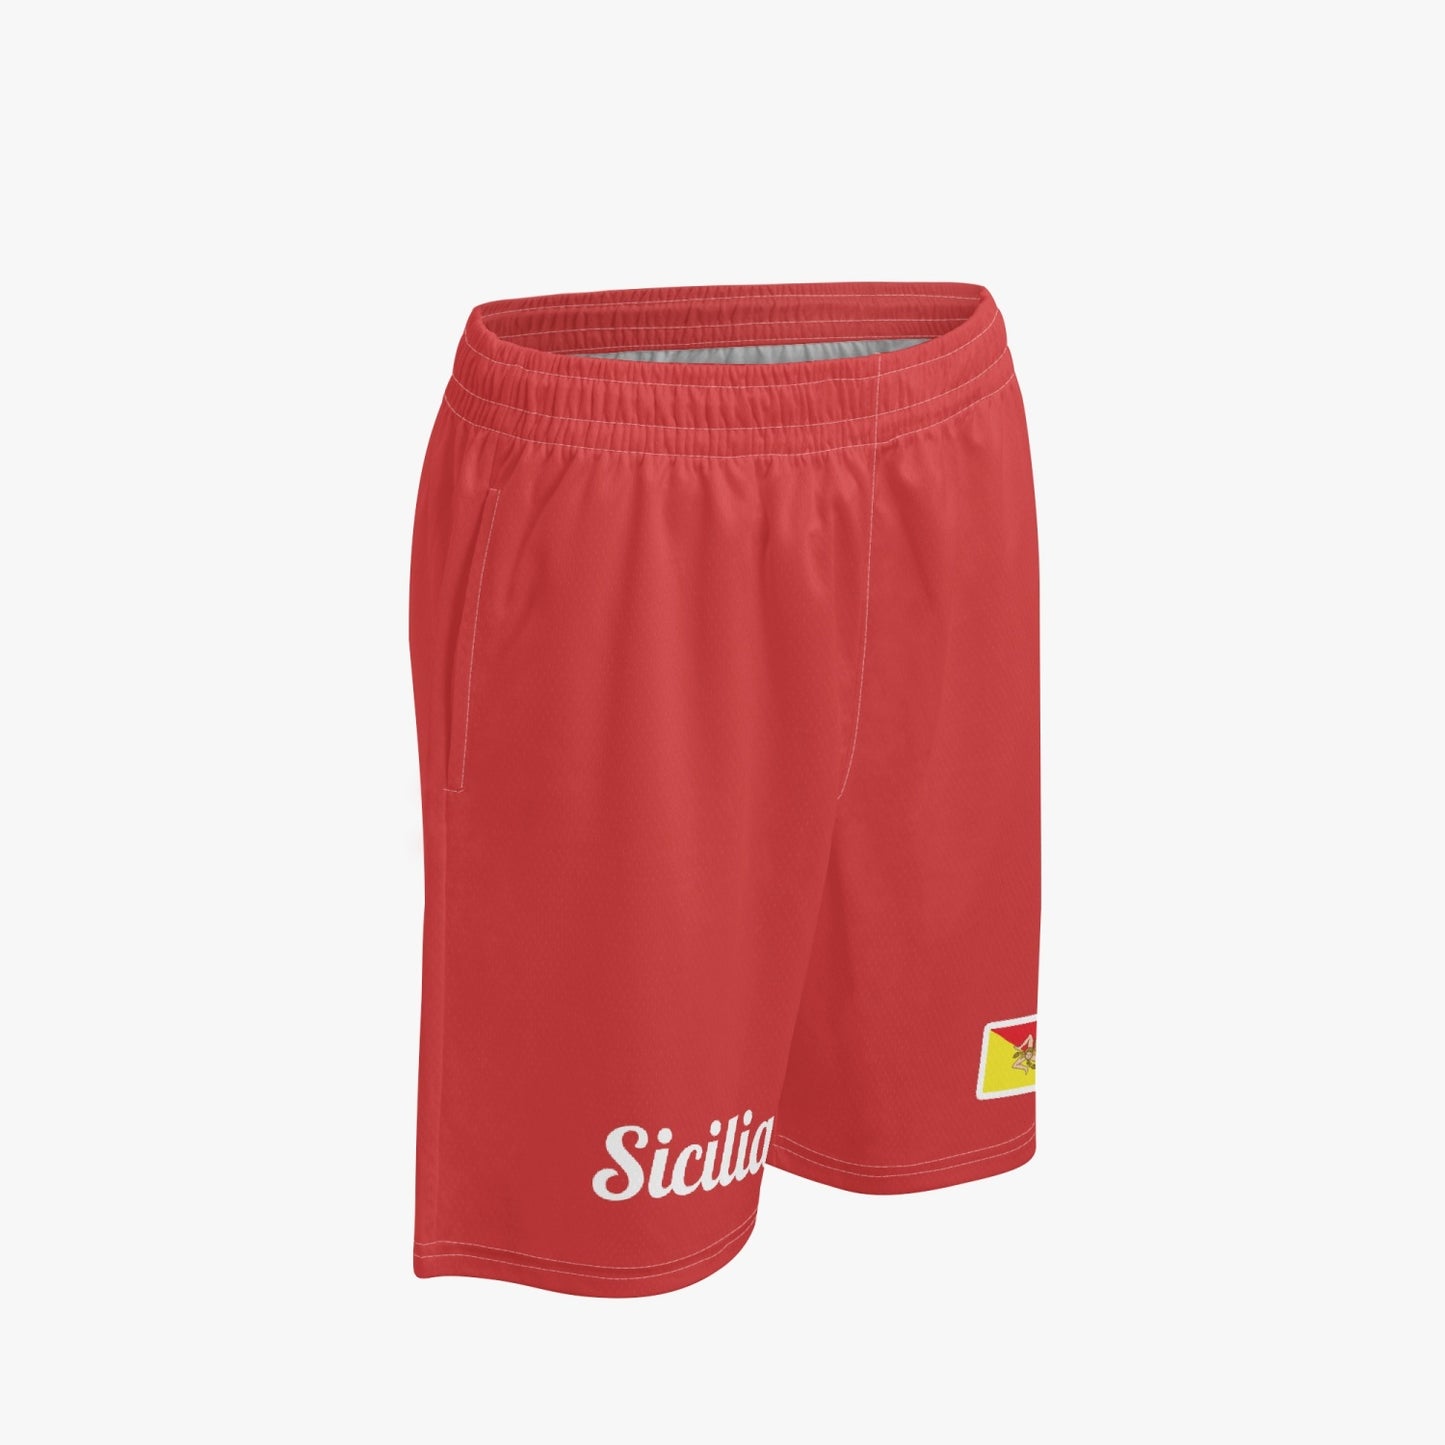 Sicilia Basketball Jersey Set